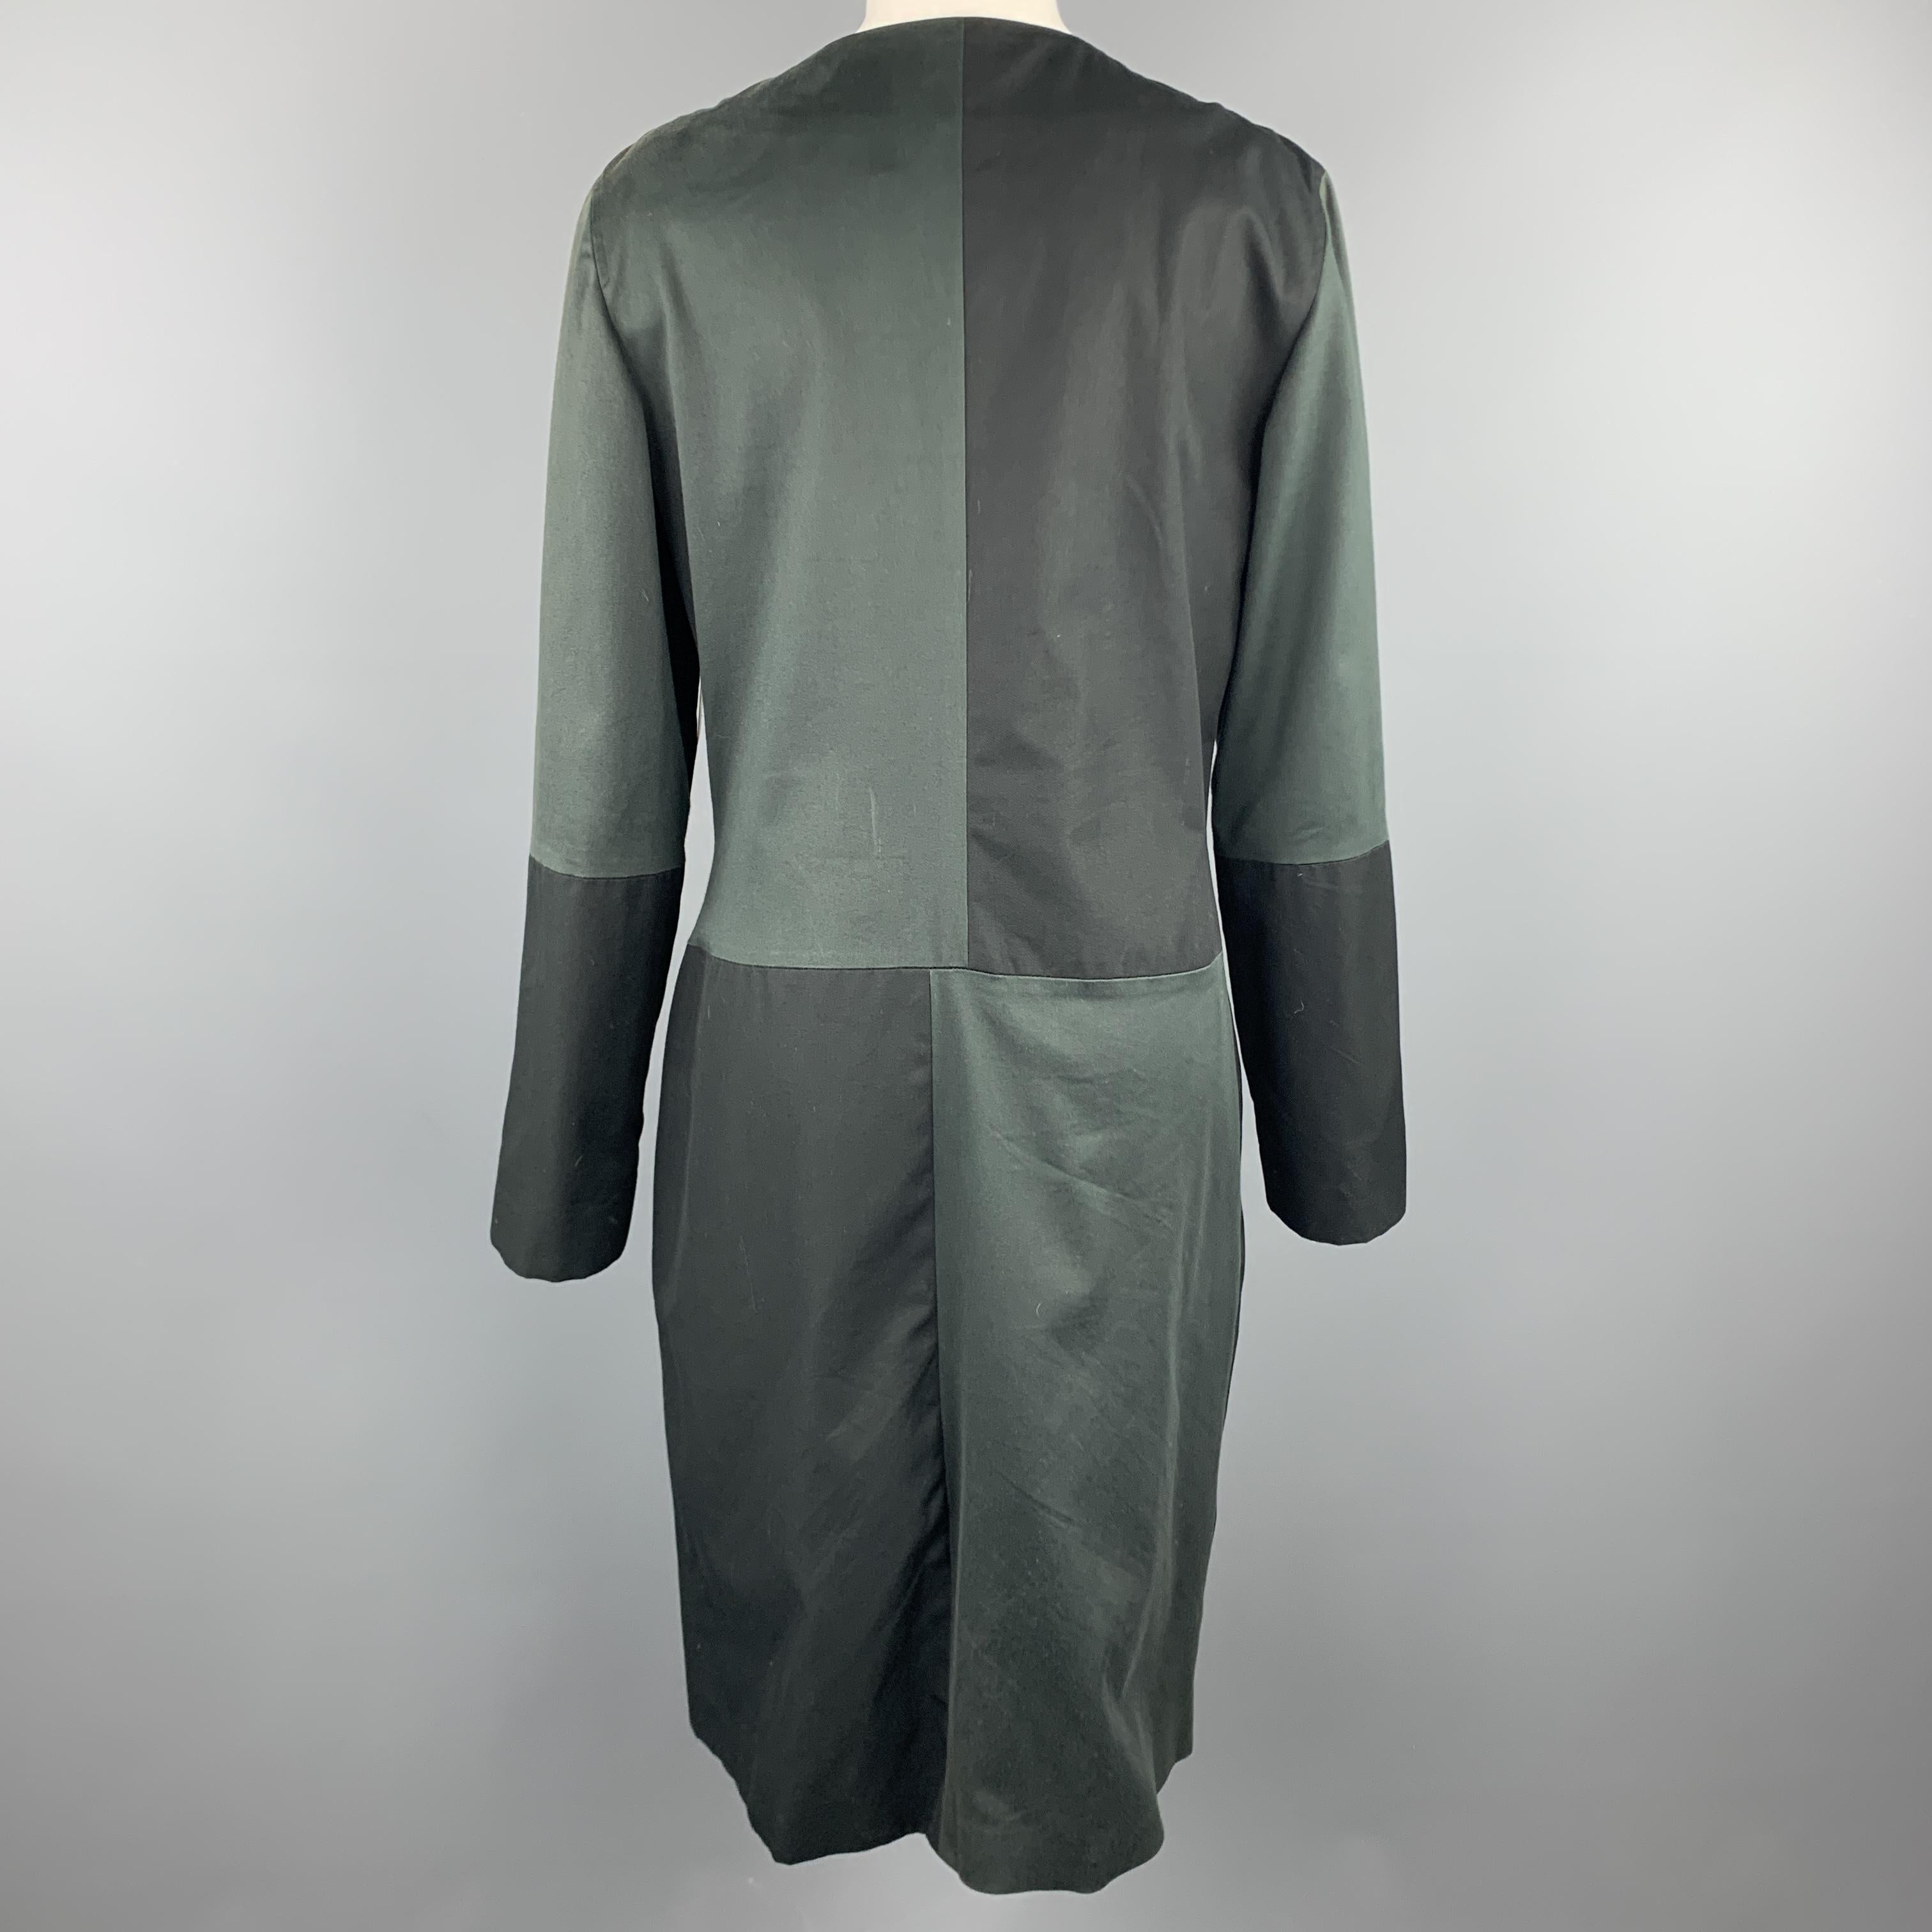 Women's VERSUS by GIANNI VERSACE Size 10 Black & Green Cotton Color Block Coat